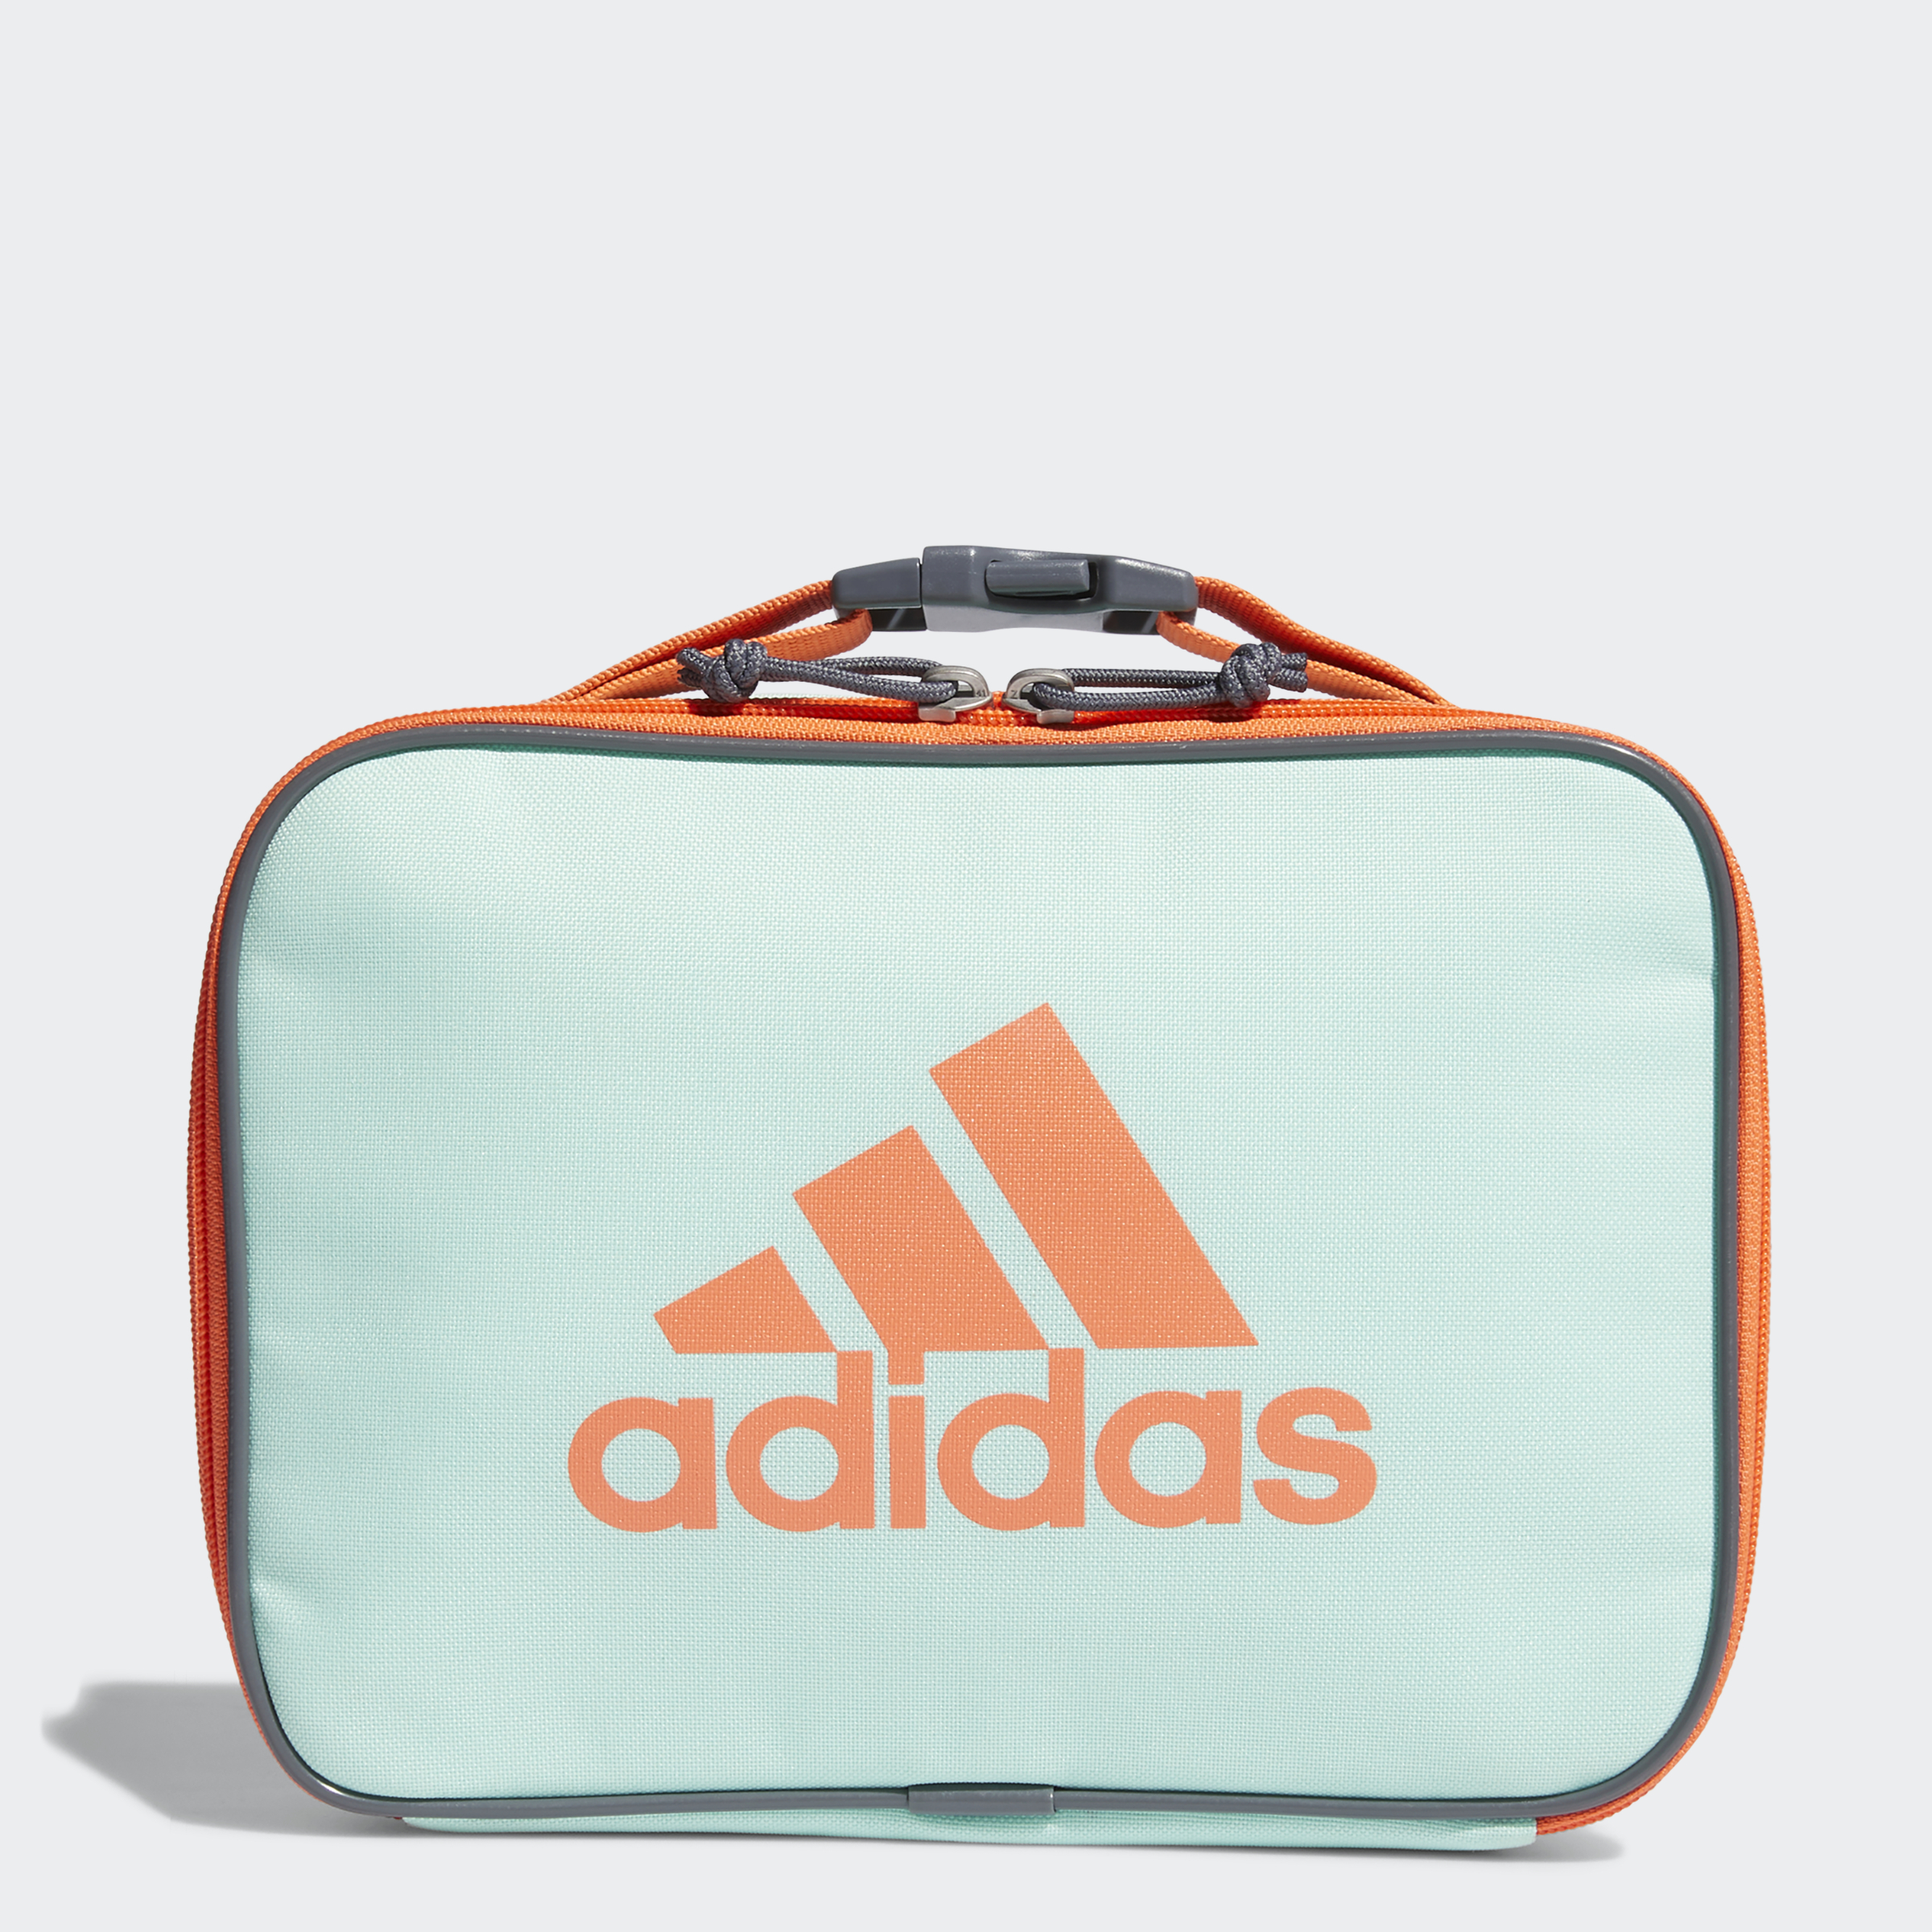 Adidas base Almuerzo Bolso Niños | eBay